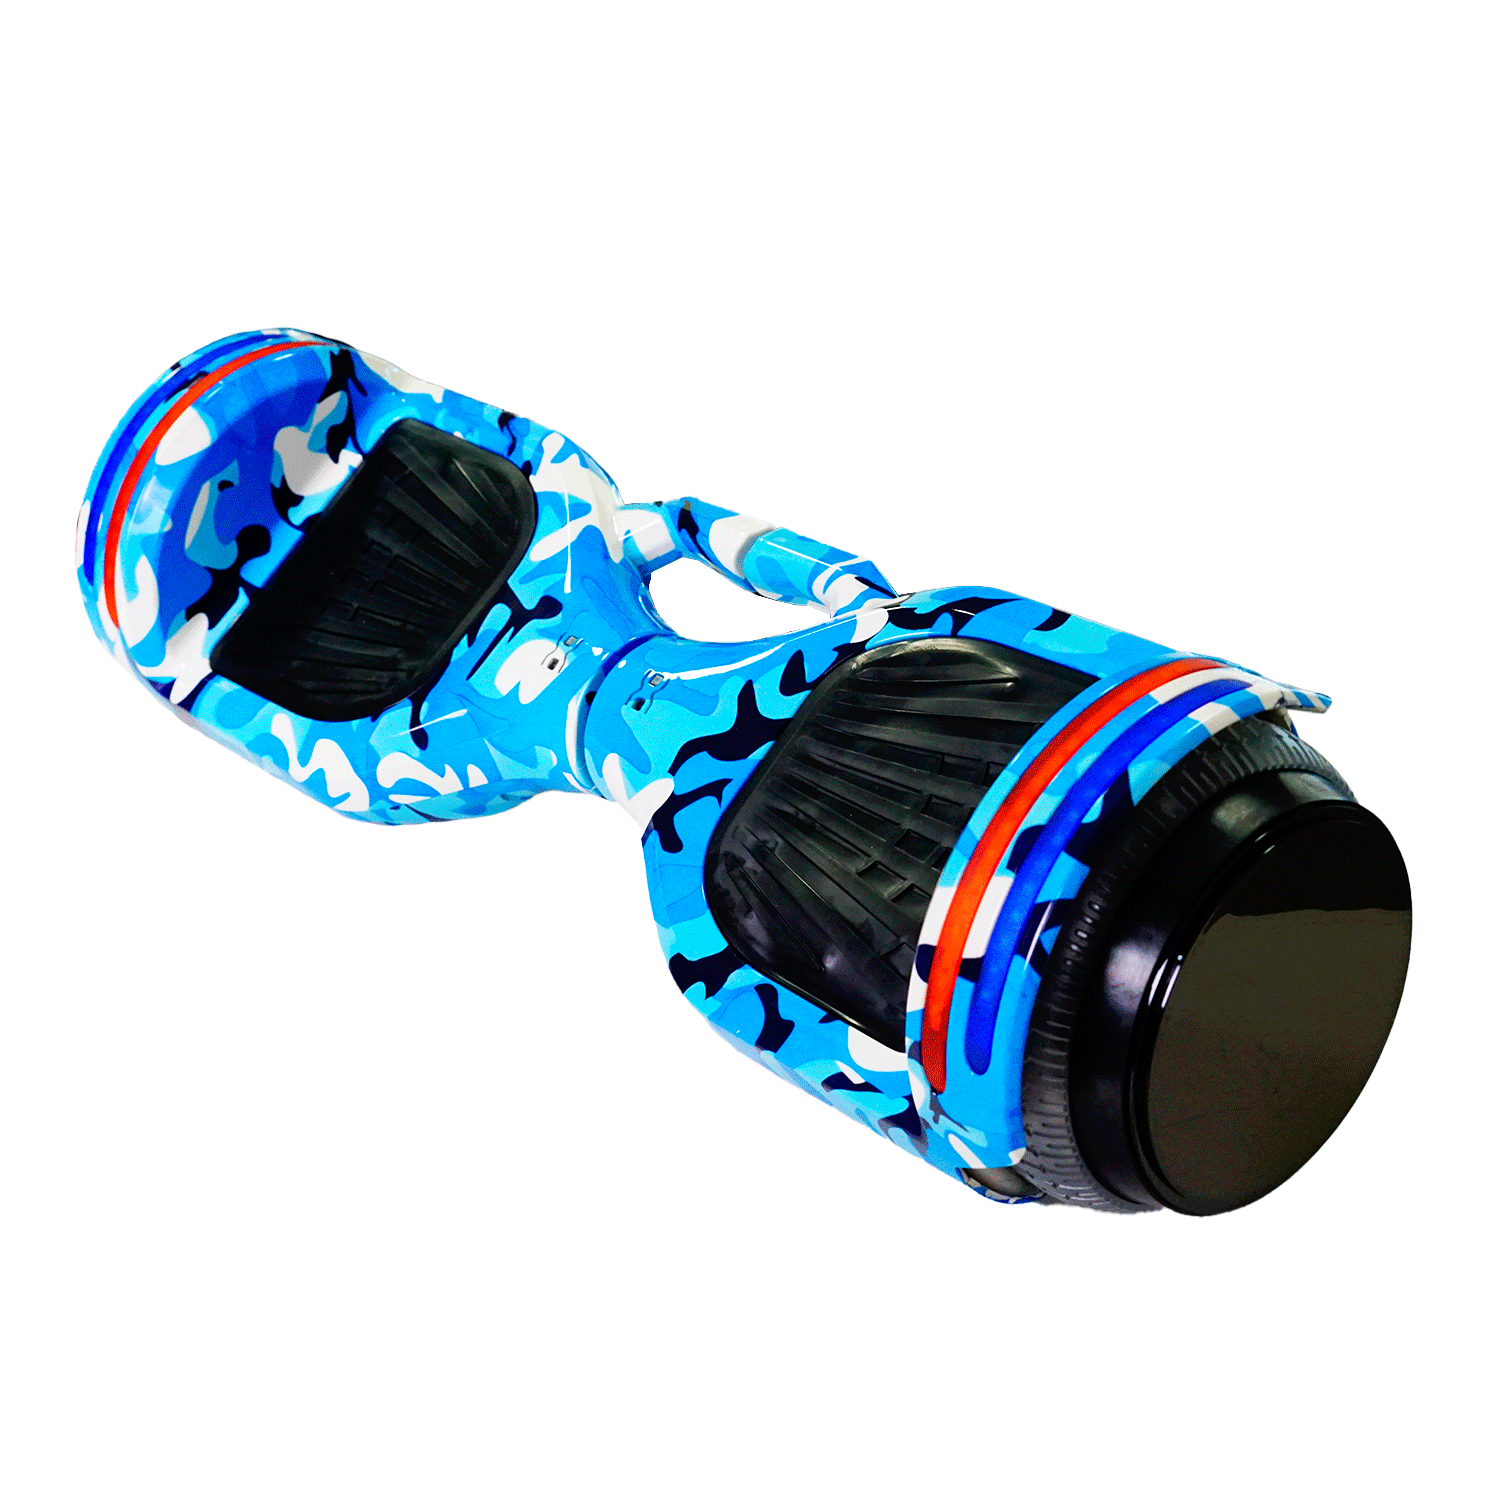 Scooter Elétrico Star Hoverboard 6.5" / Bluetooth / LED 3D / Bolsa - Azul Camuflado 
